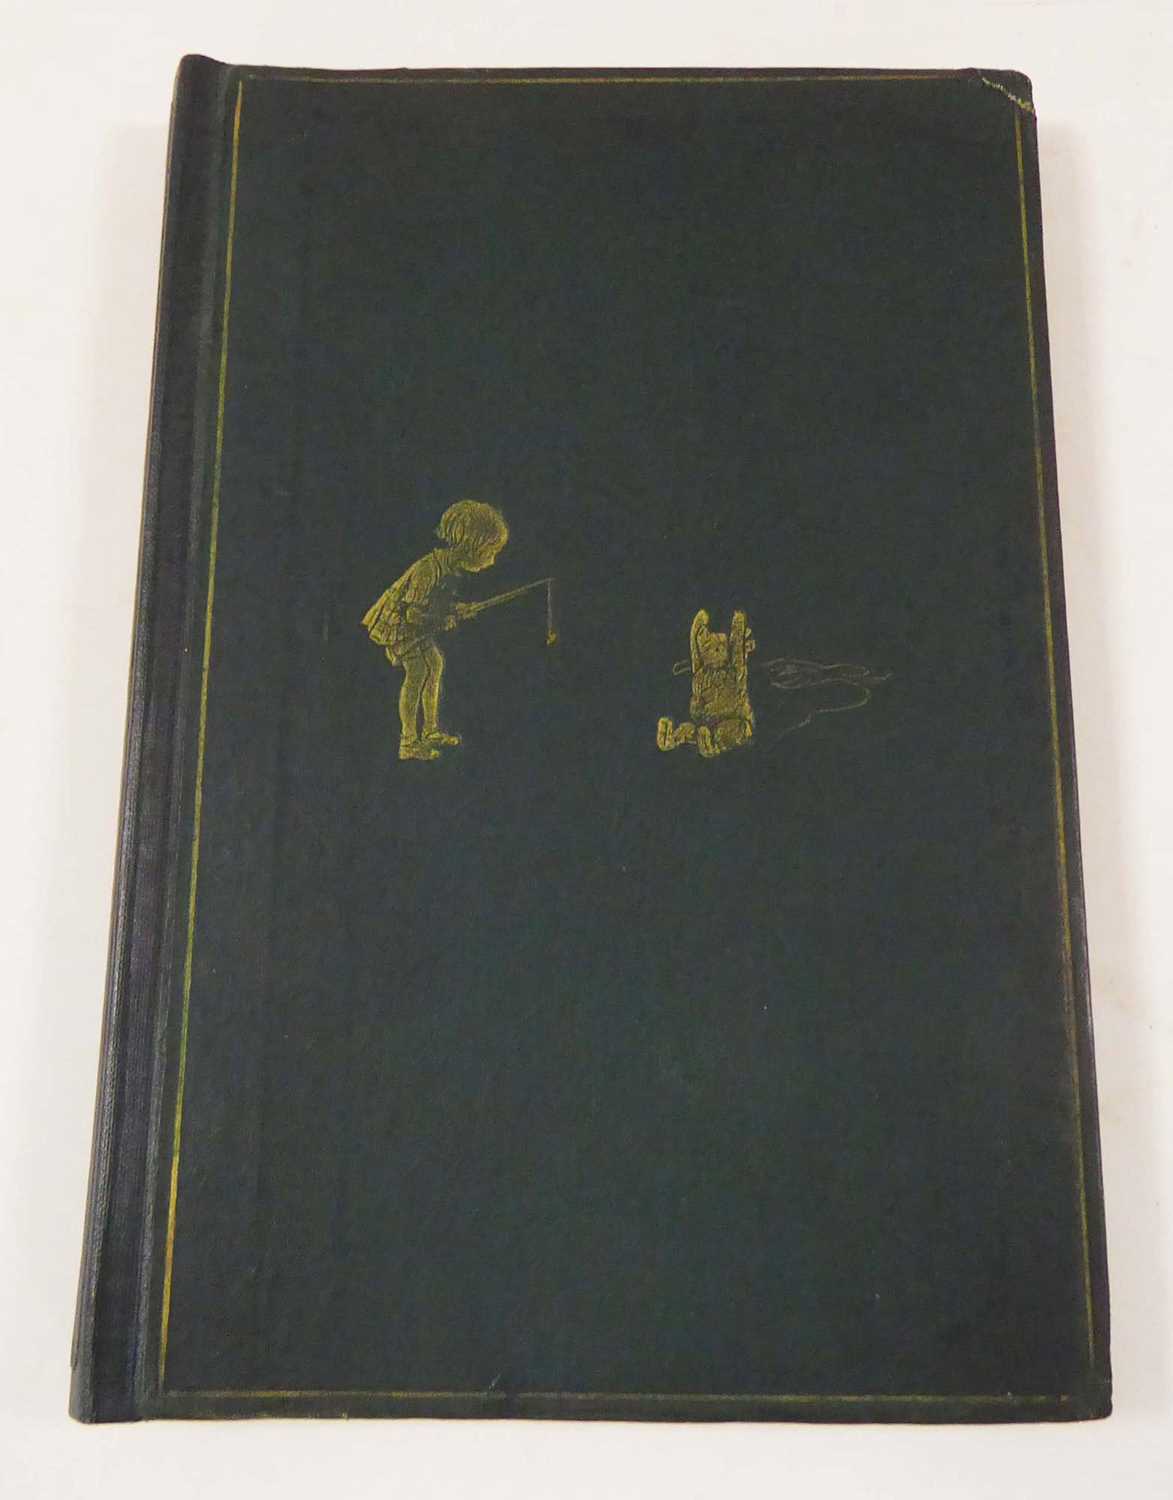 Alan Alexander Milne & Ernest Shepard : Winnie the Pooh, 1926. 1st. Edition. Original green cloth - Image 7 of 7